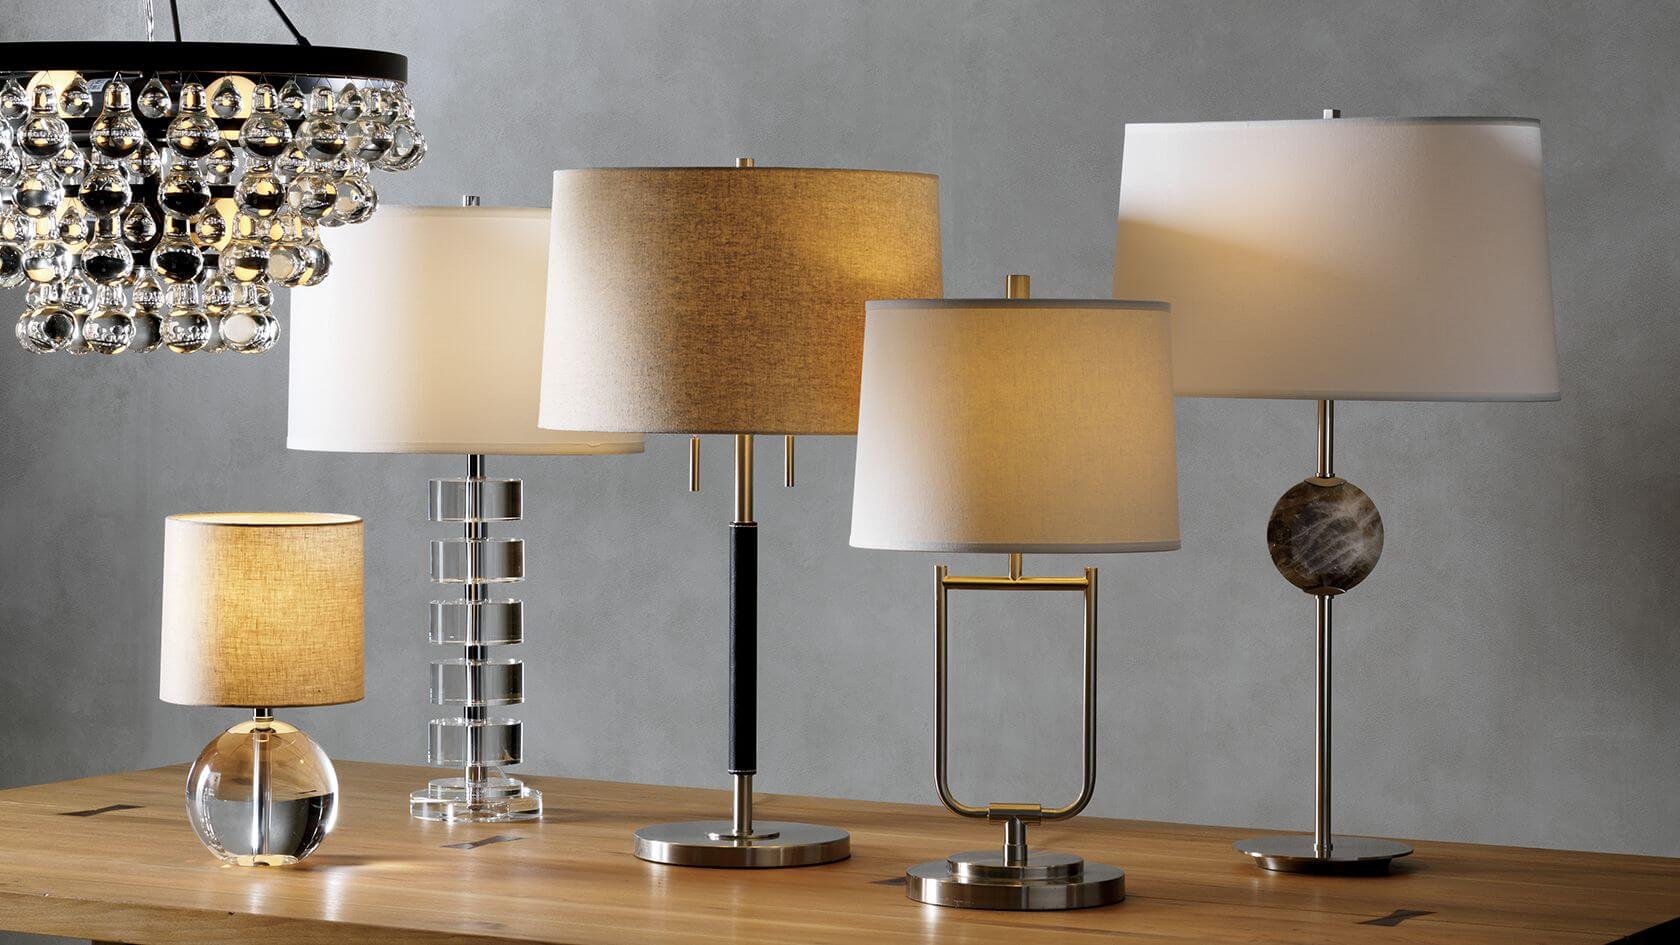 emocionante derrochador Amedrentador 20+ Best Table Lamp Design Ideas Taken From Pinterest